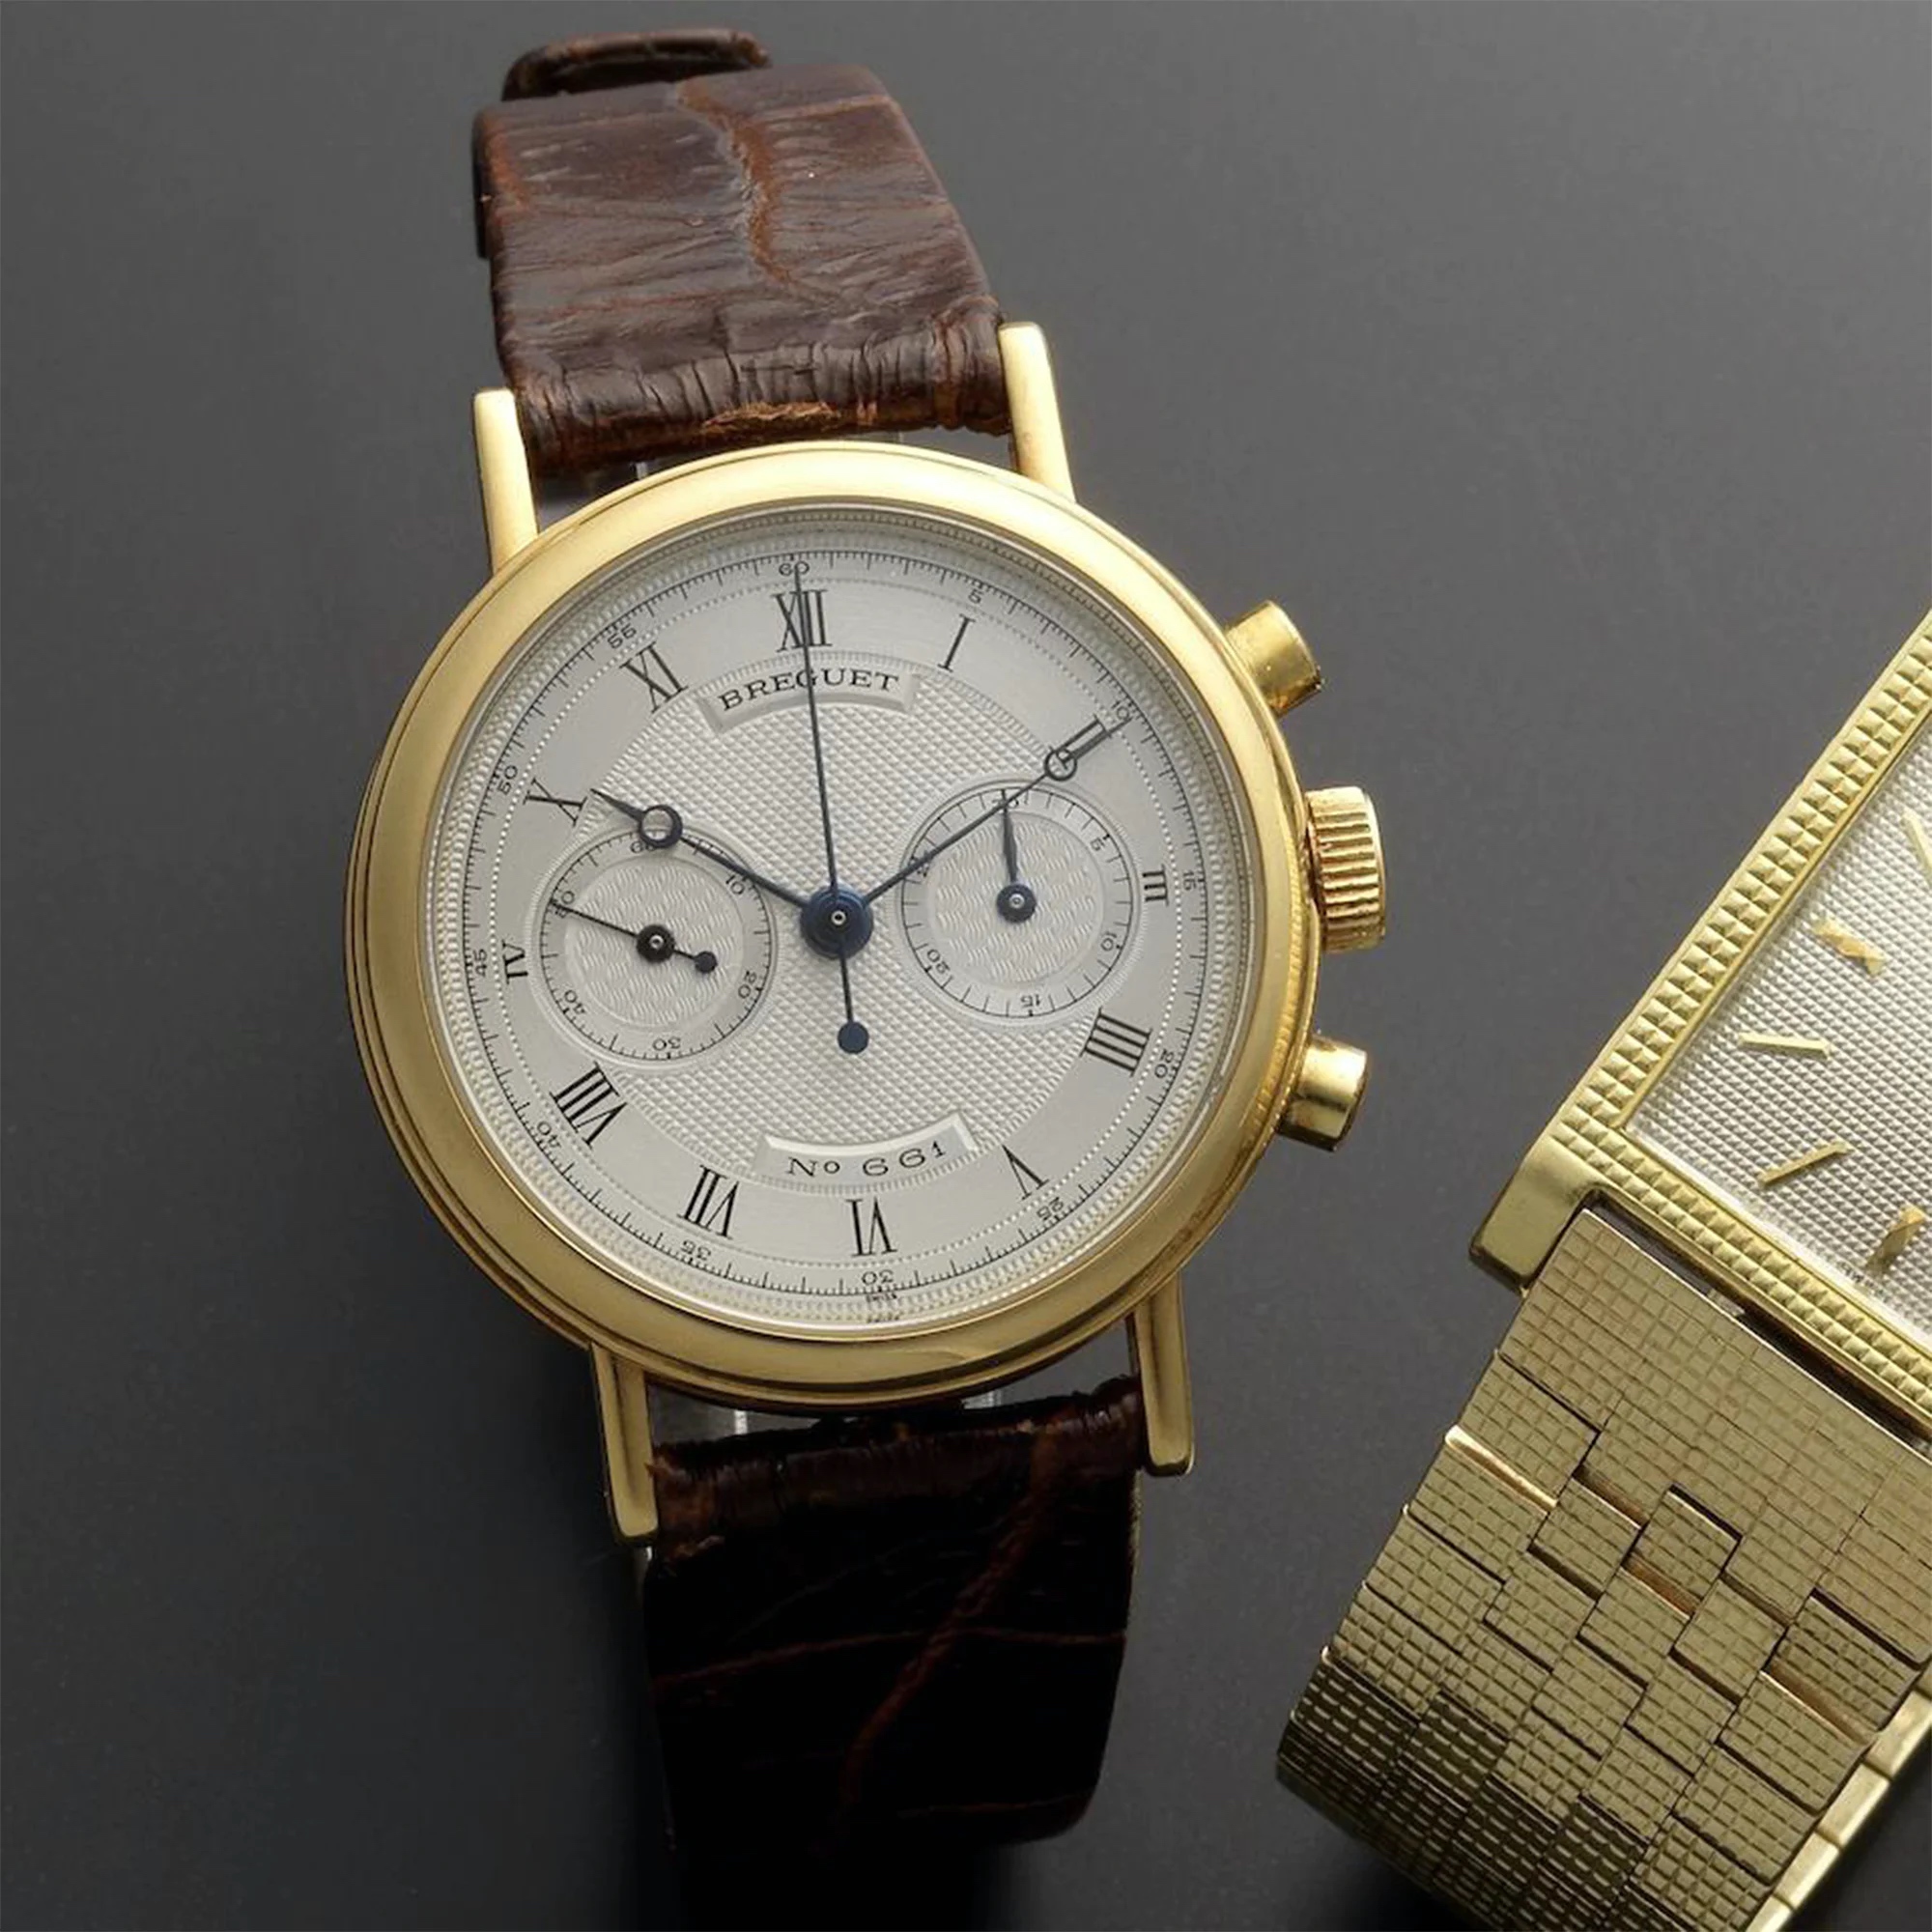 Buying, Selling, & Collecting: 時計愛好家たちが過小評価しているが 